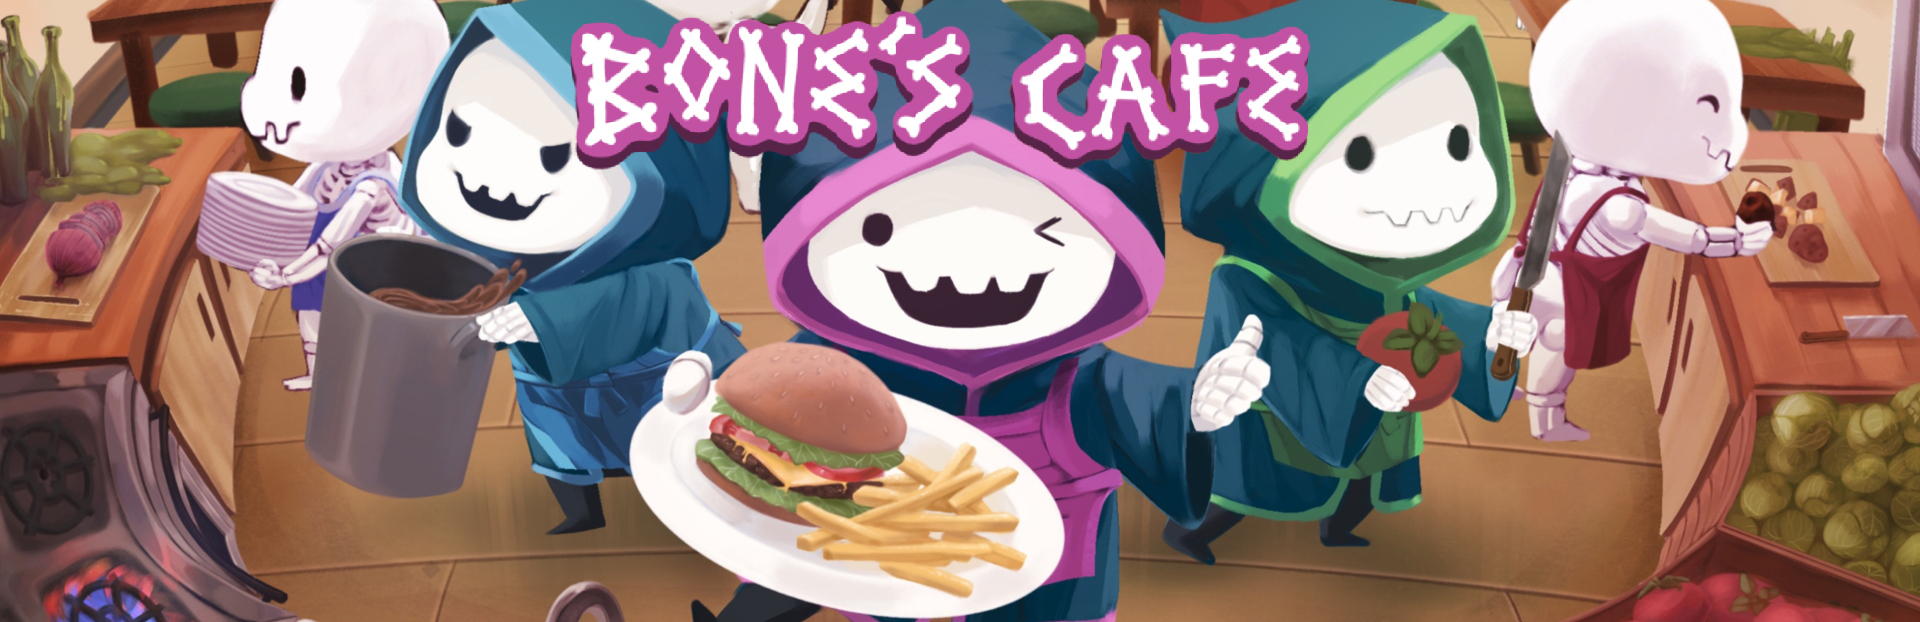 Bones Cafe